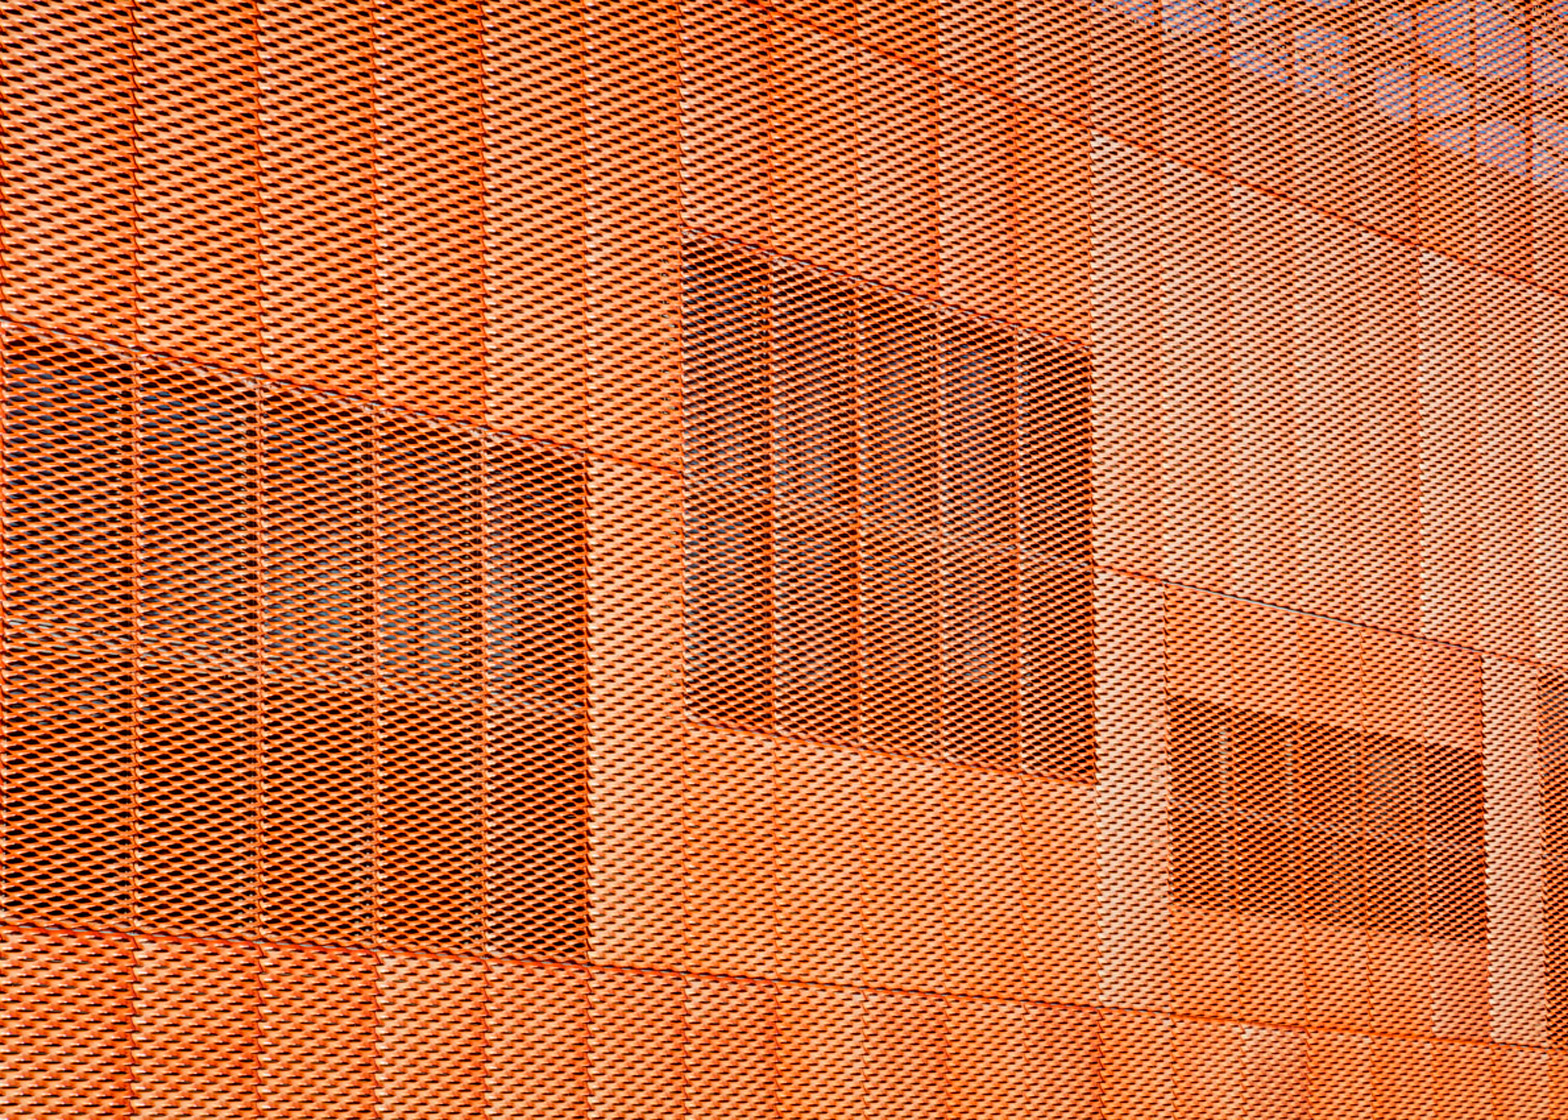 Manuelle Gautrand Splits Exhibition Centre Into 13 Orange Blocks